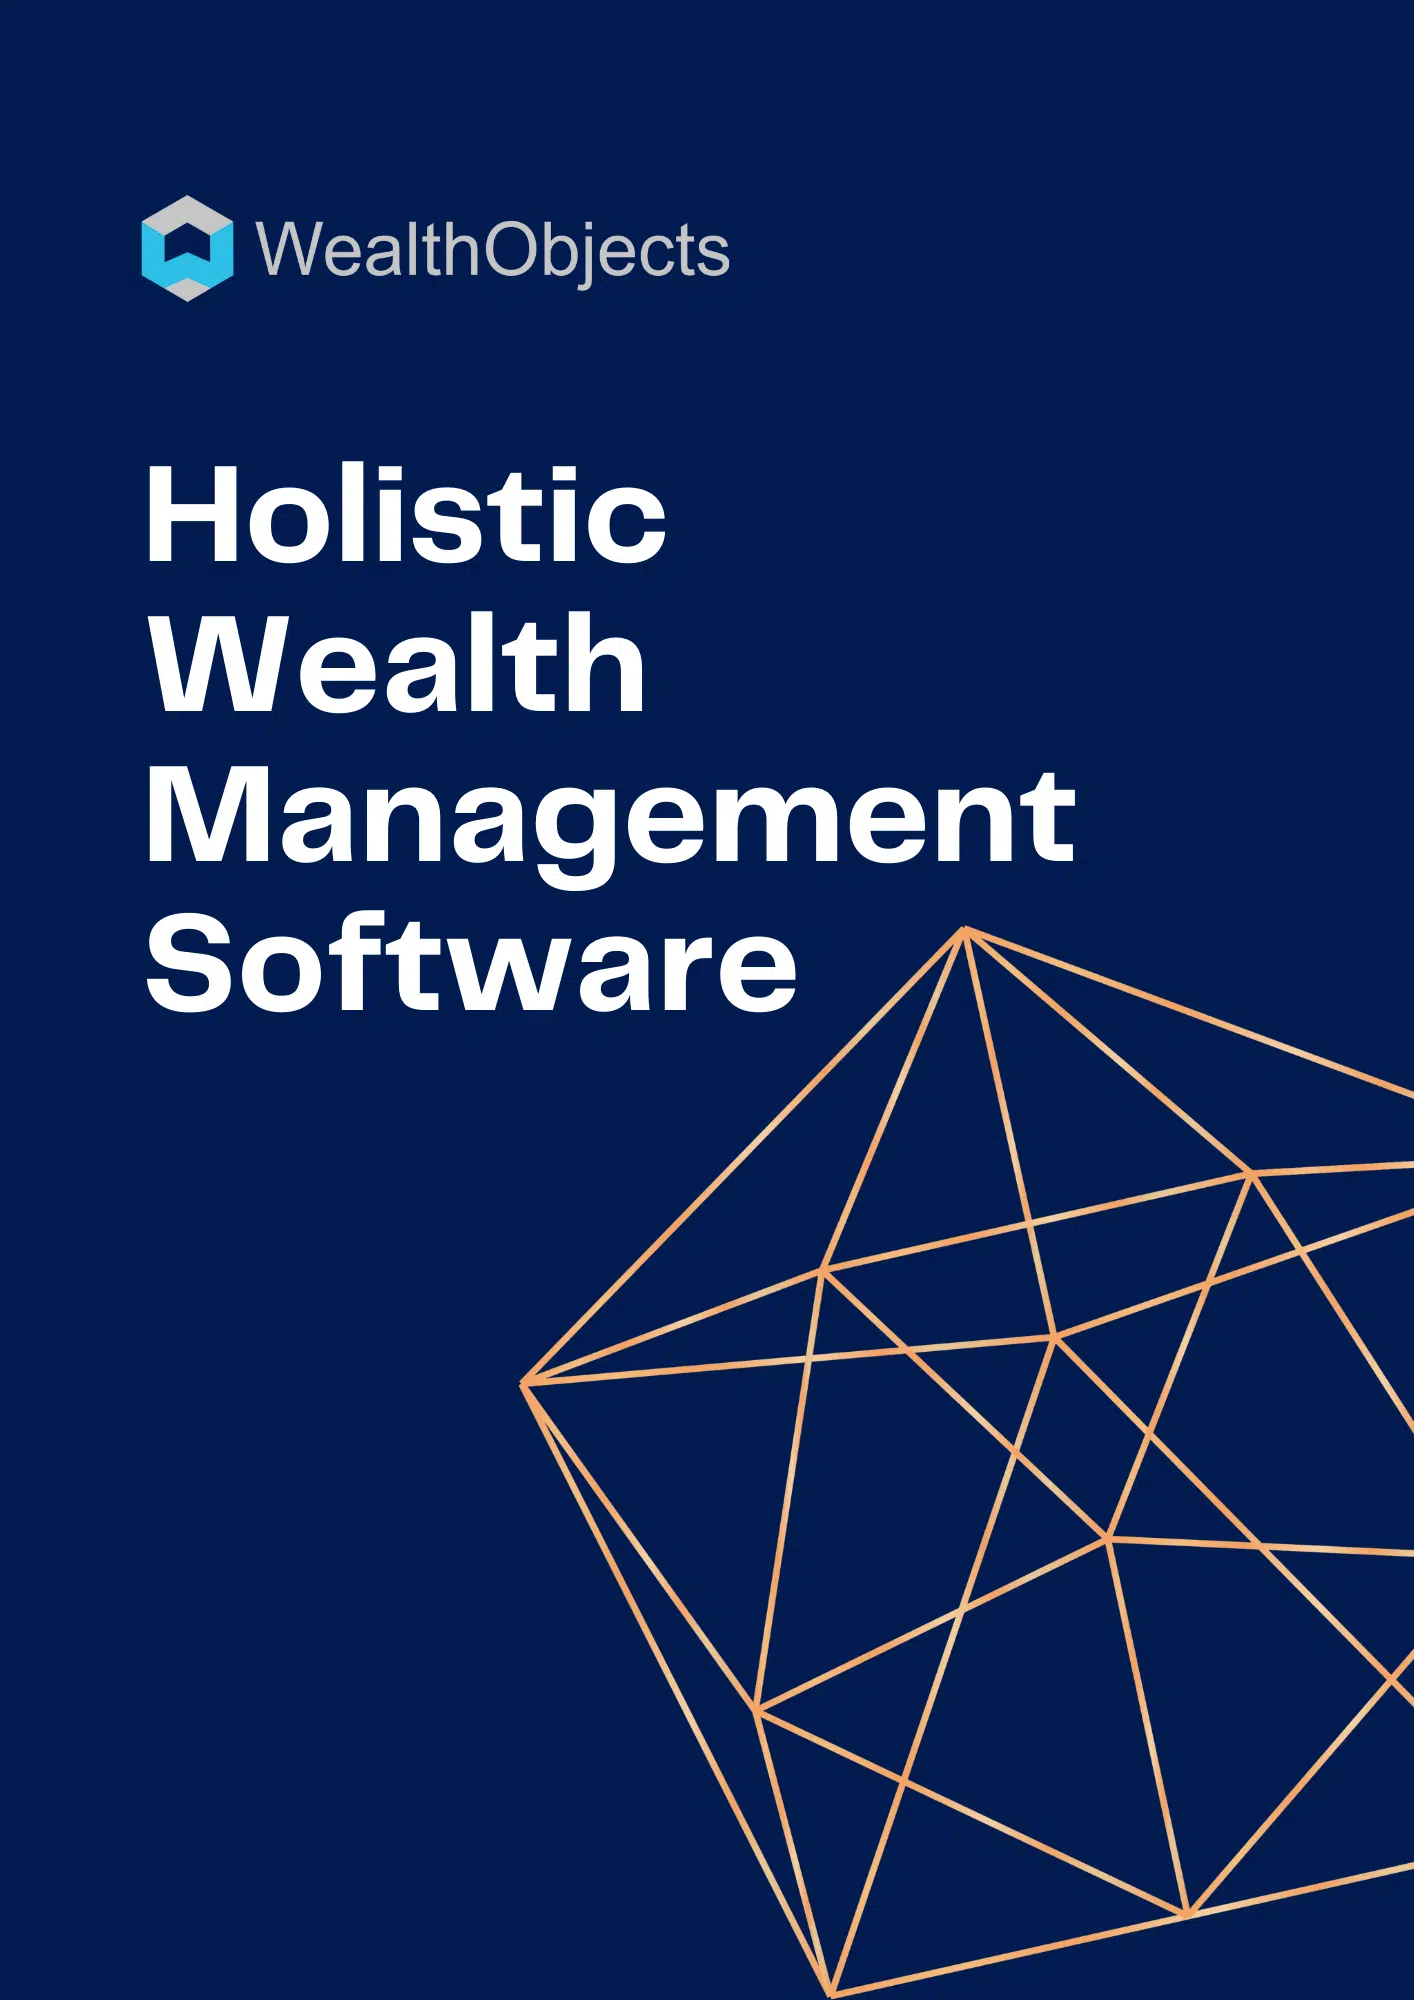 https://wealthobjects.com/storage/2022/02/Holistic-Wealth-Advisory-Software-WealthObjects